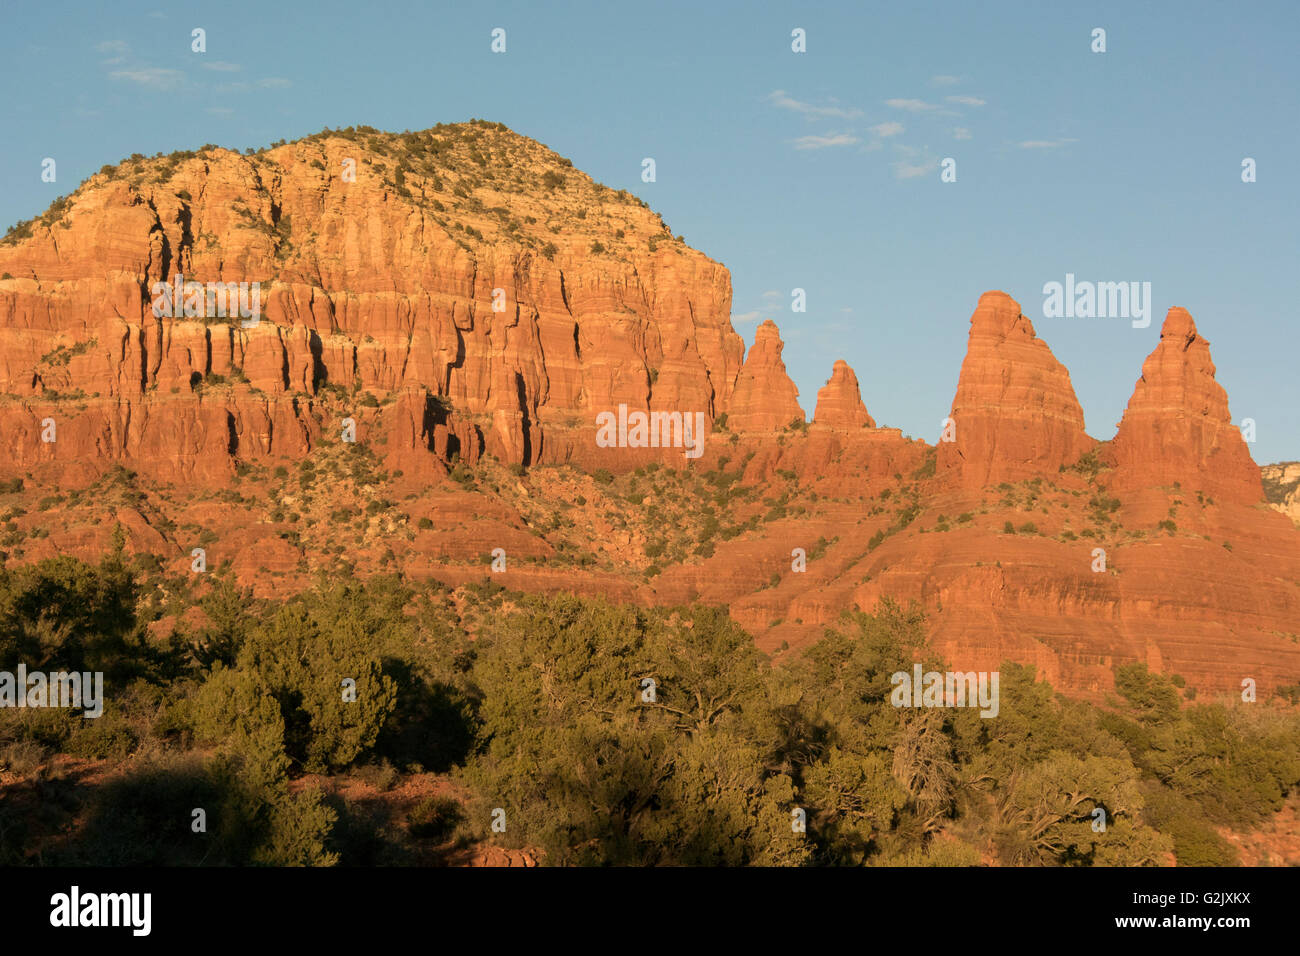 Malerische Felsformation Nonnen (R) Coconino National Forest Sedona Arizona Nordamerika geologisch - Hämatit/Eisenoxid bekannt Stockfoto